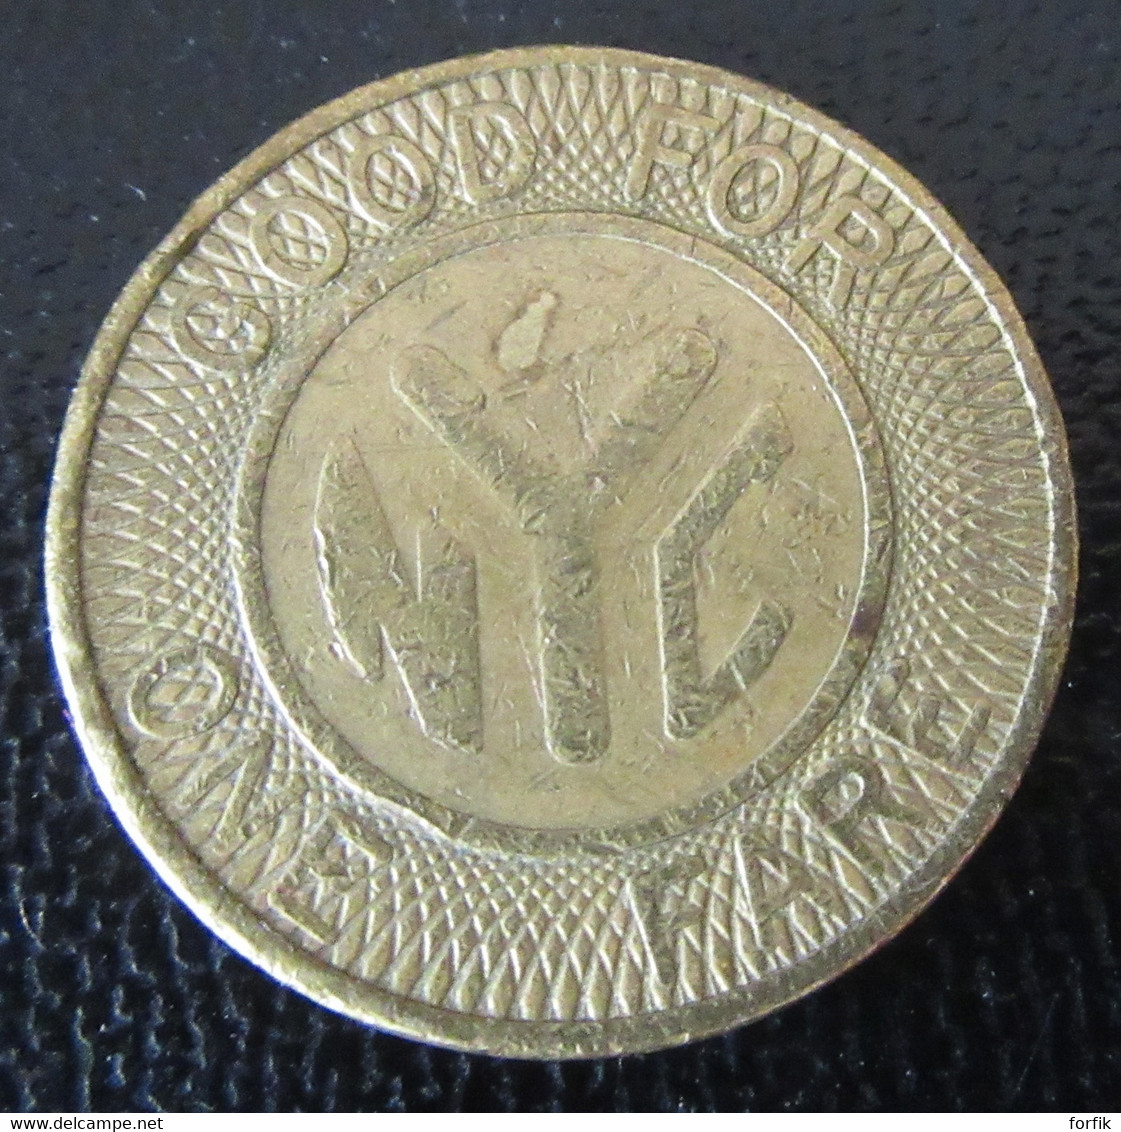 Etats-Unis / United States - Jeton Metro New-York City Transot Authority / Good For One Fare - Monedas/ De Necesidad